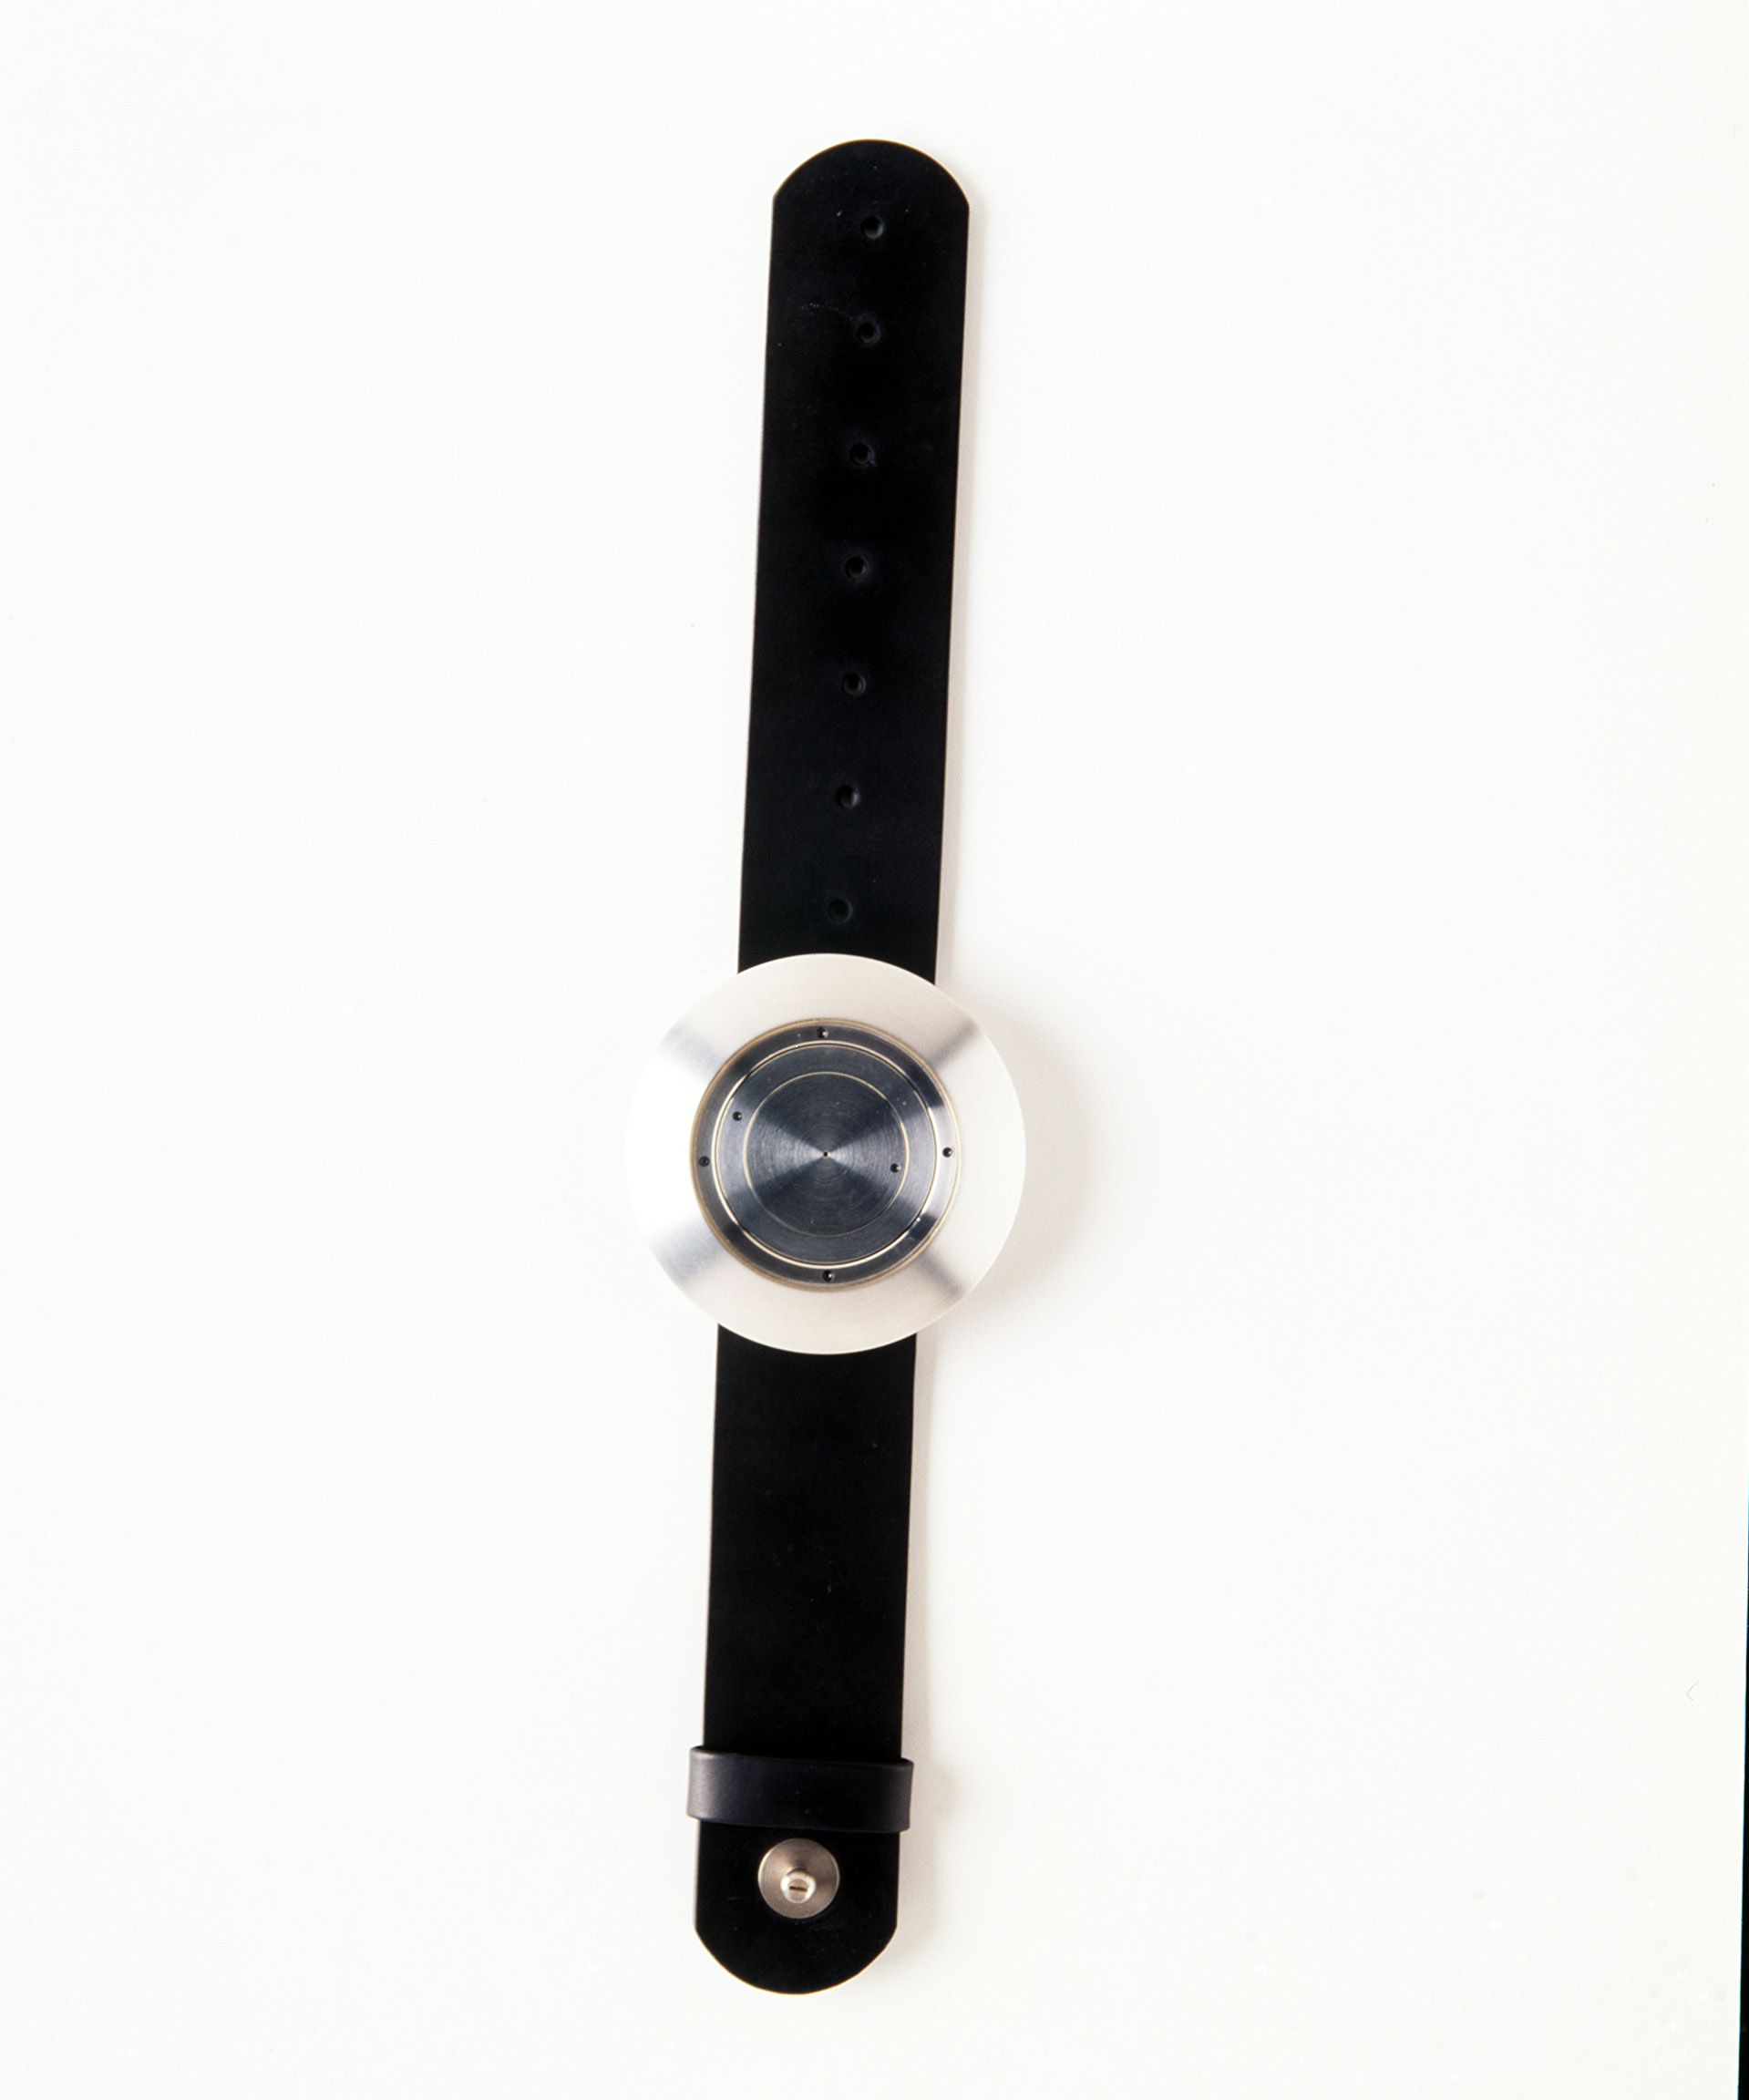 Powerhouse Collection - 'Large Pod' wrist watch by Marc Newson